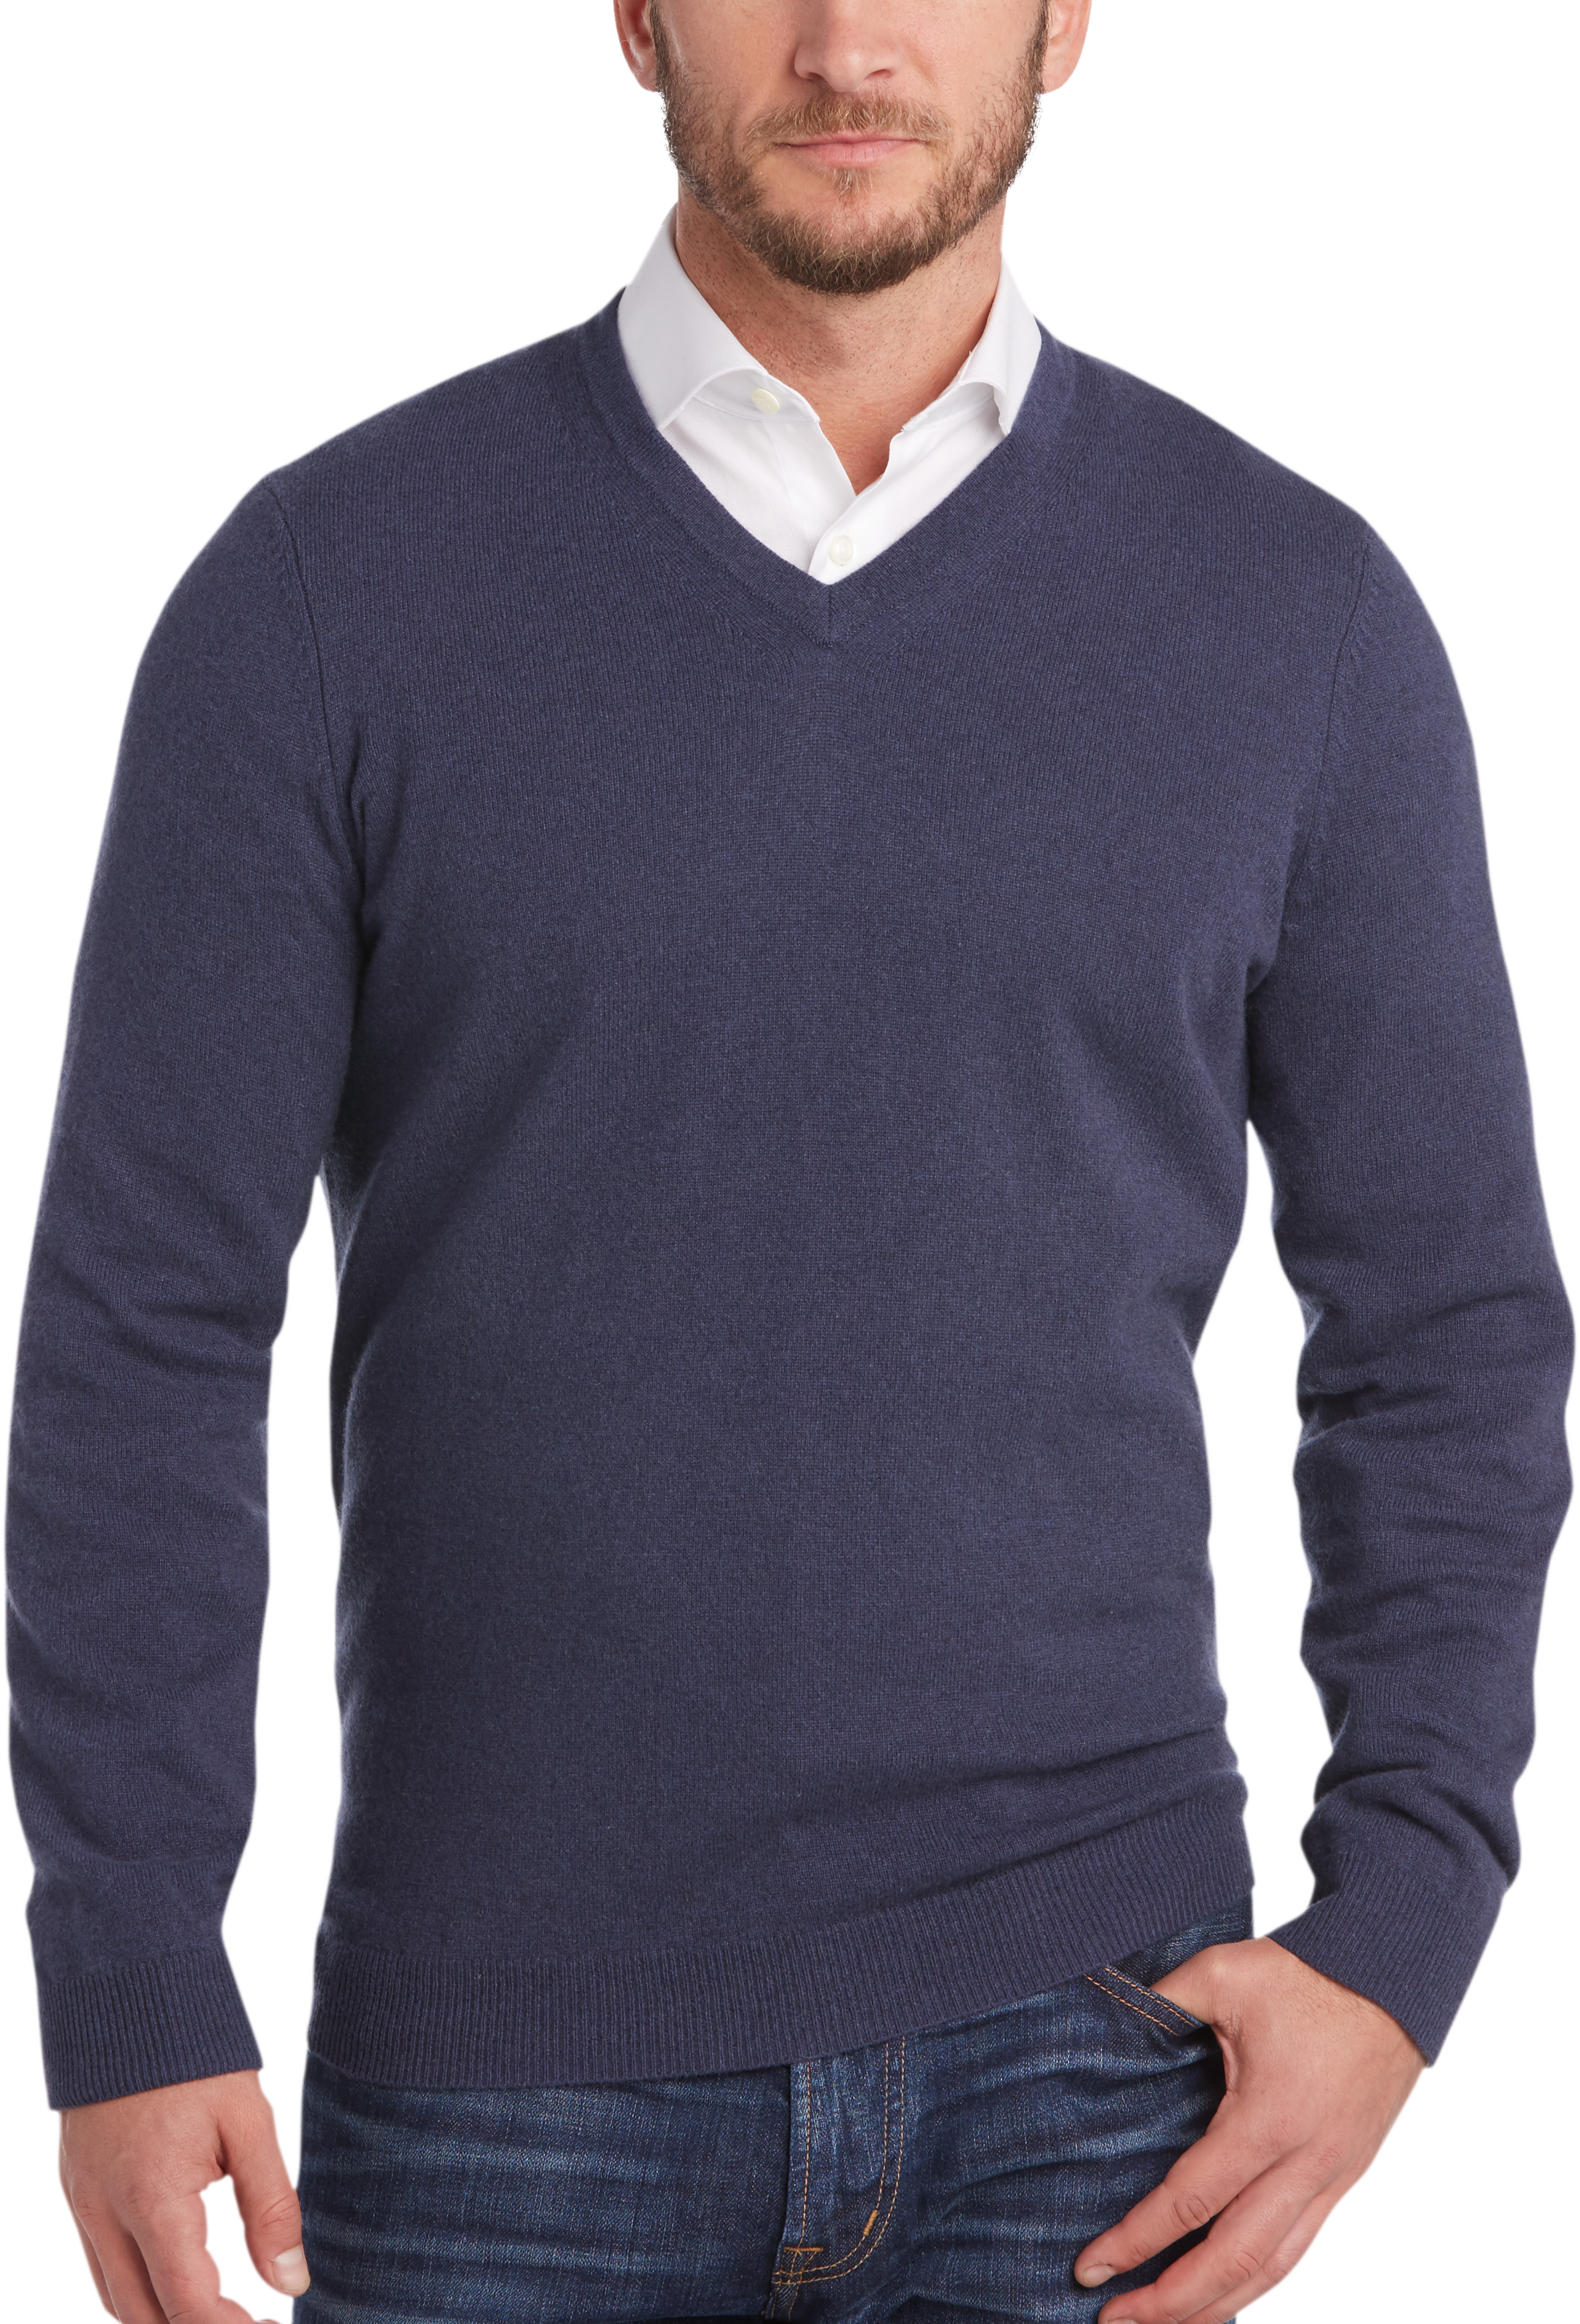 Joseph Abboud Black V-Neck Cashmere Sweater - Men's Modern Fit | Men's ...